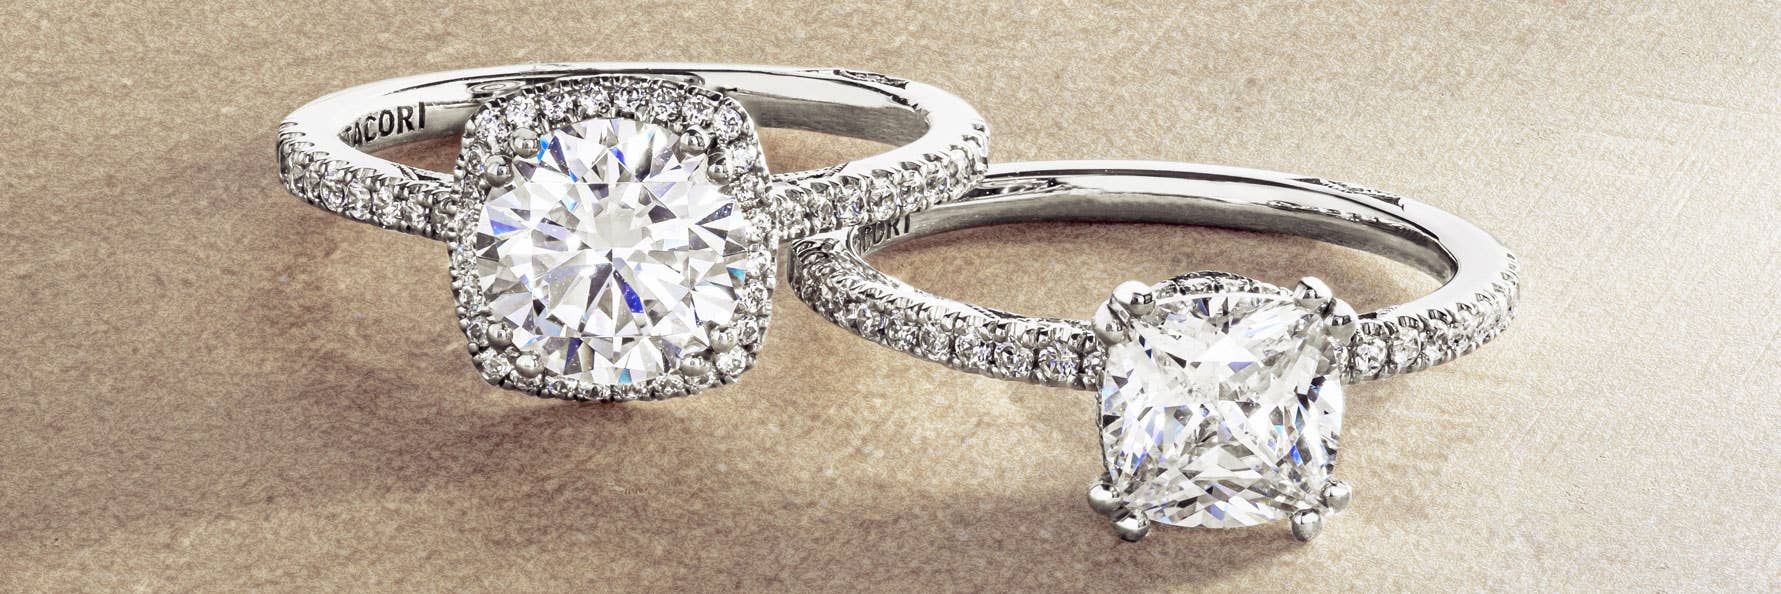 Tacori cushion cut diamond engagement ring close up